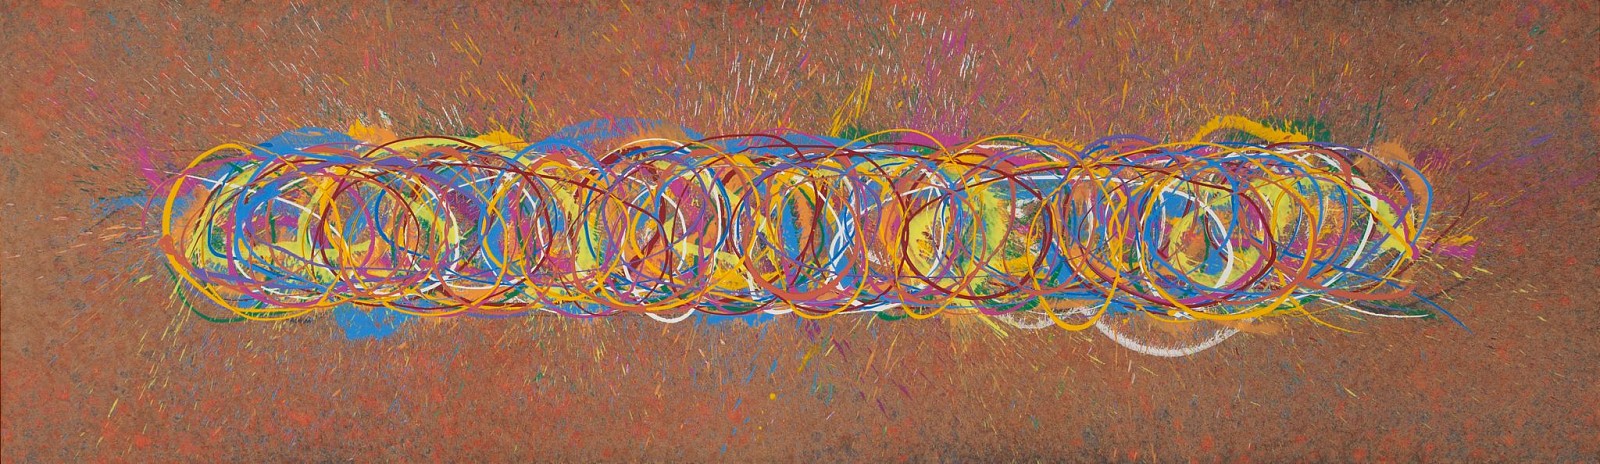 Dan Christensen, Regulator | SOLD, 2006
Acrylic on canvas, 28 x 96 in. (71.1 x 243.8 cm)
CHR-00192